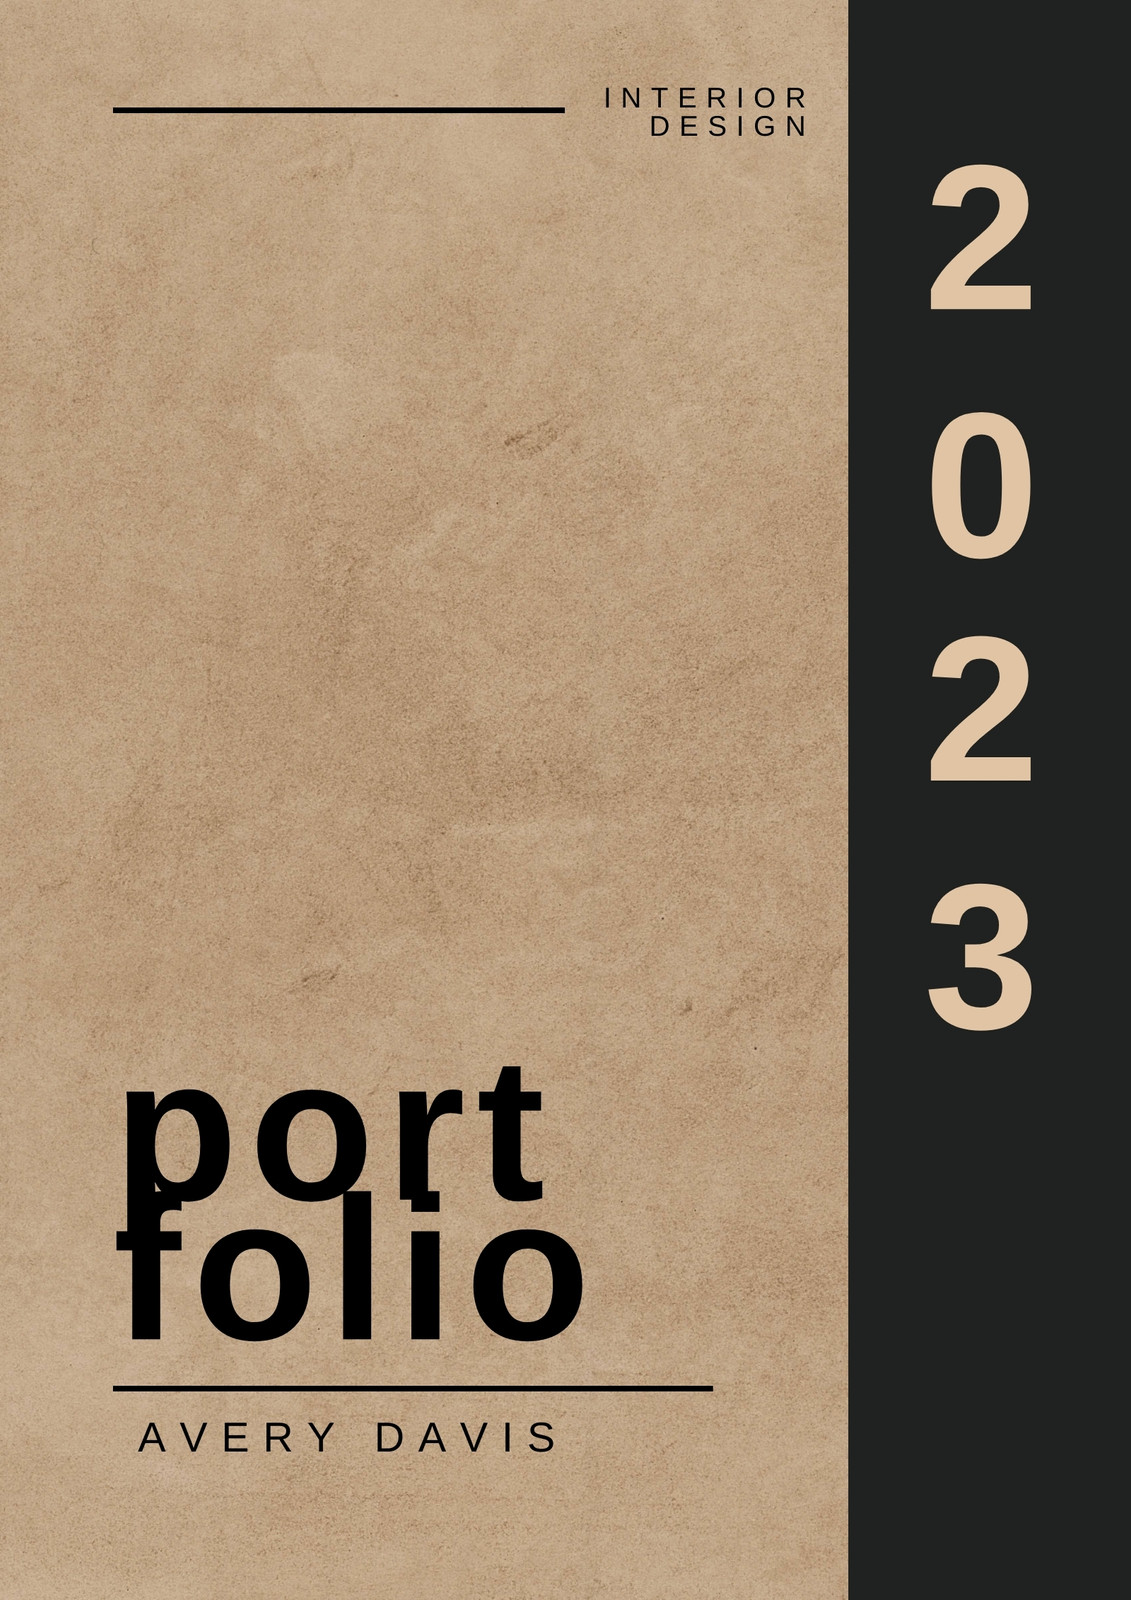 portfolio cover page design